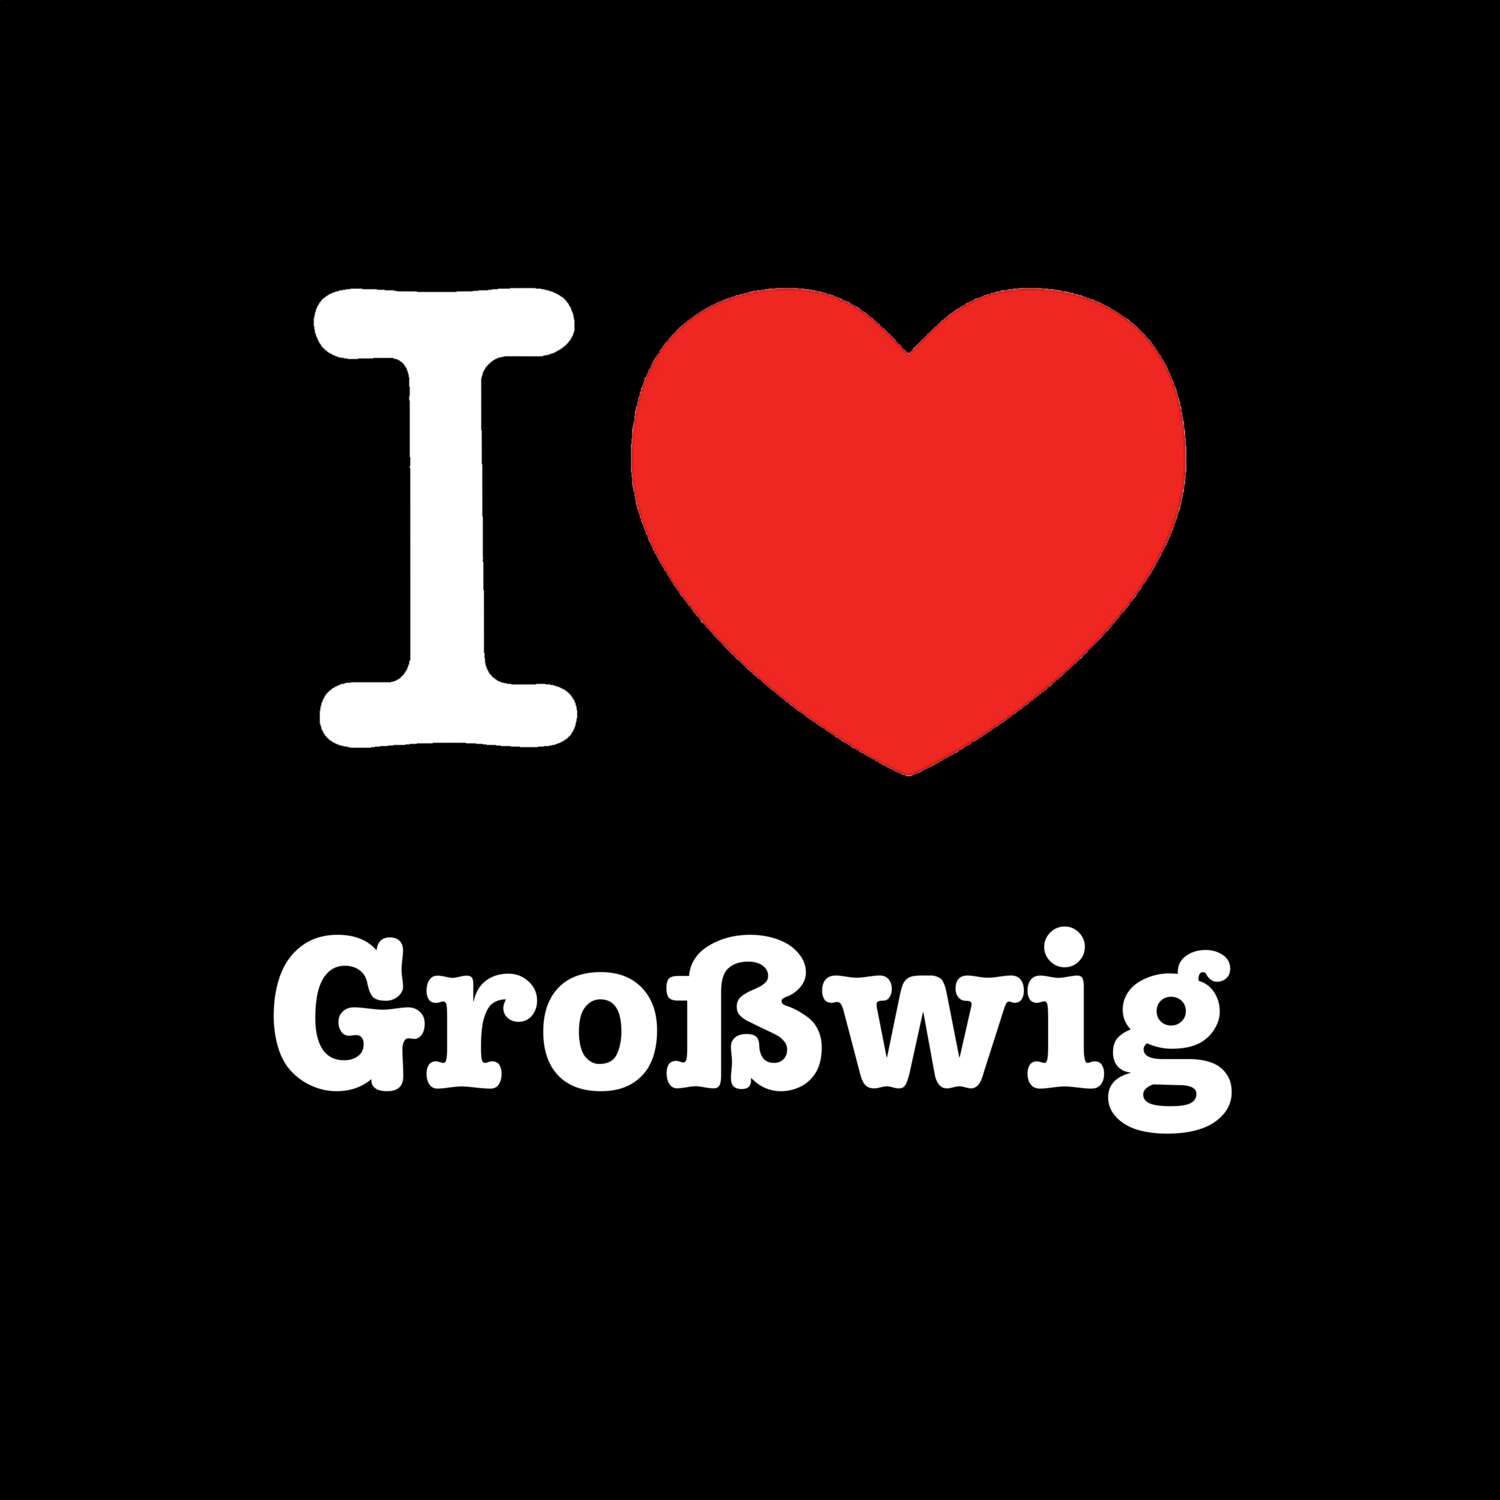 Großwig T-Shirt »I love«